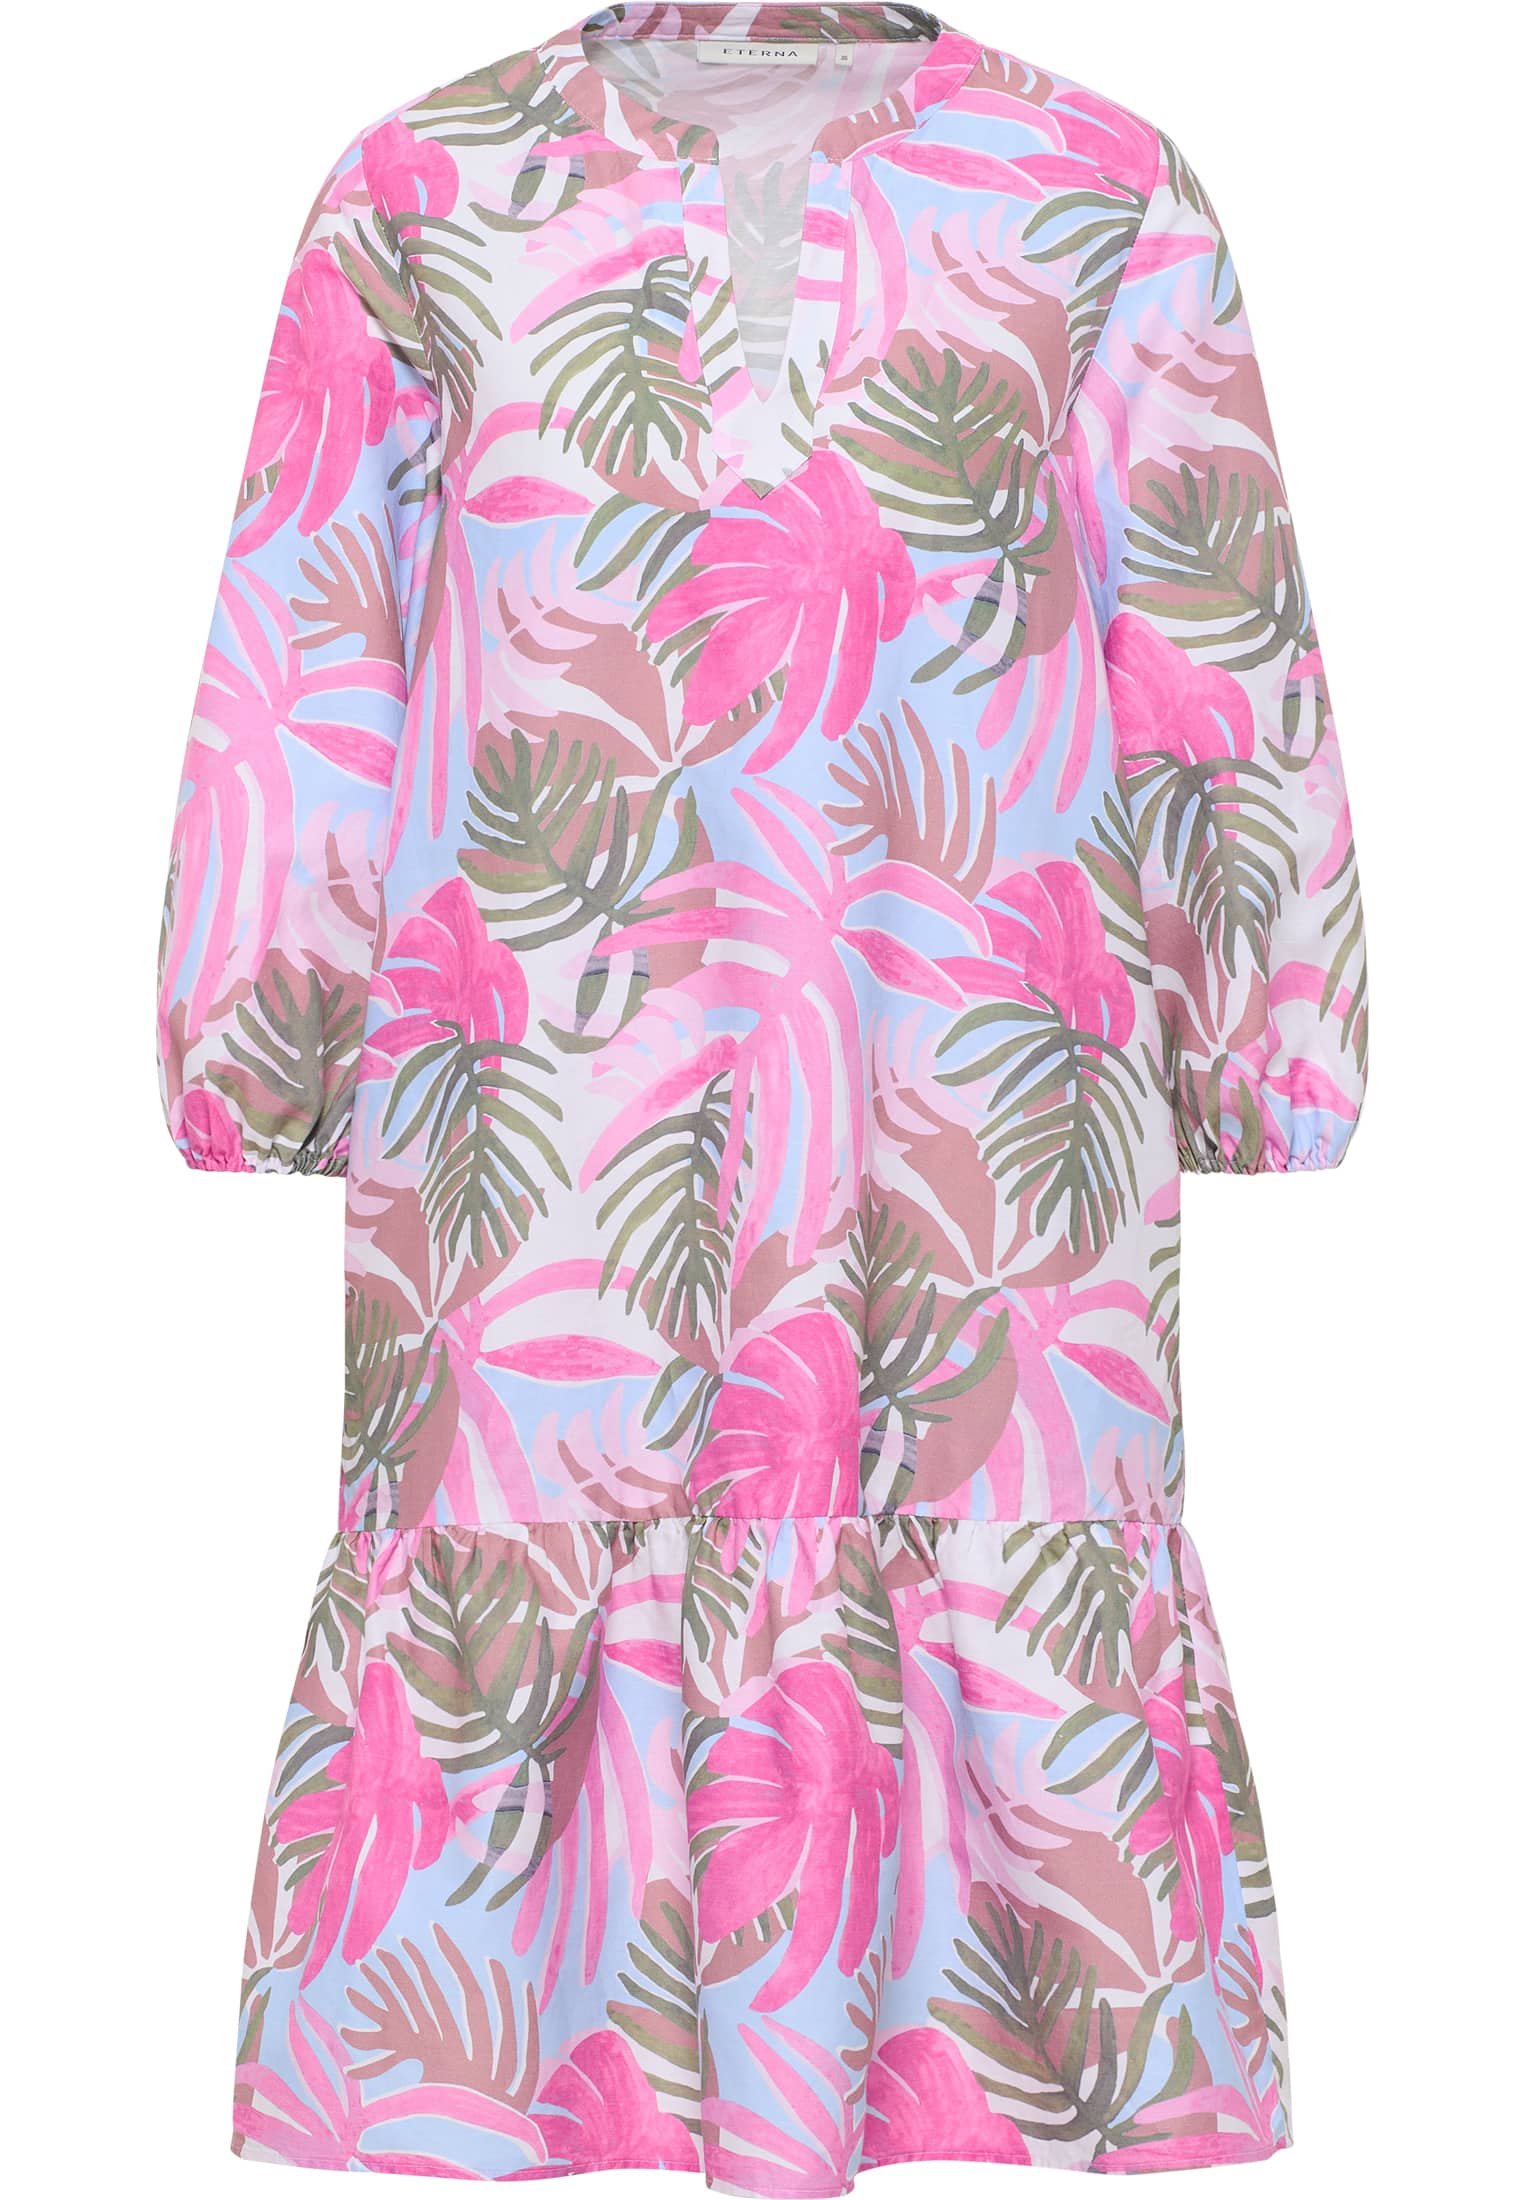 printed dress 2DR00246-15-11-46-3/4 | sleeves 46 | Shirt 3/4 rose rose | | in